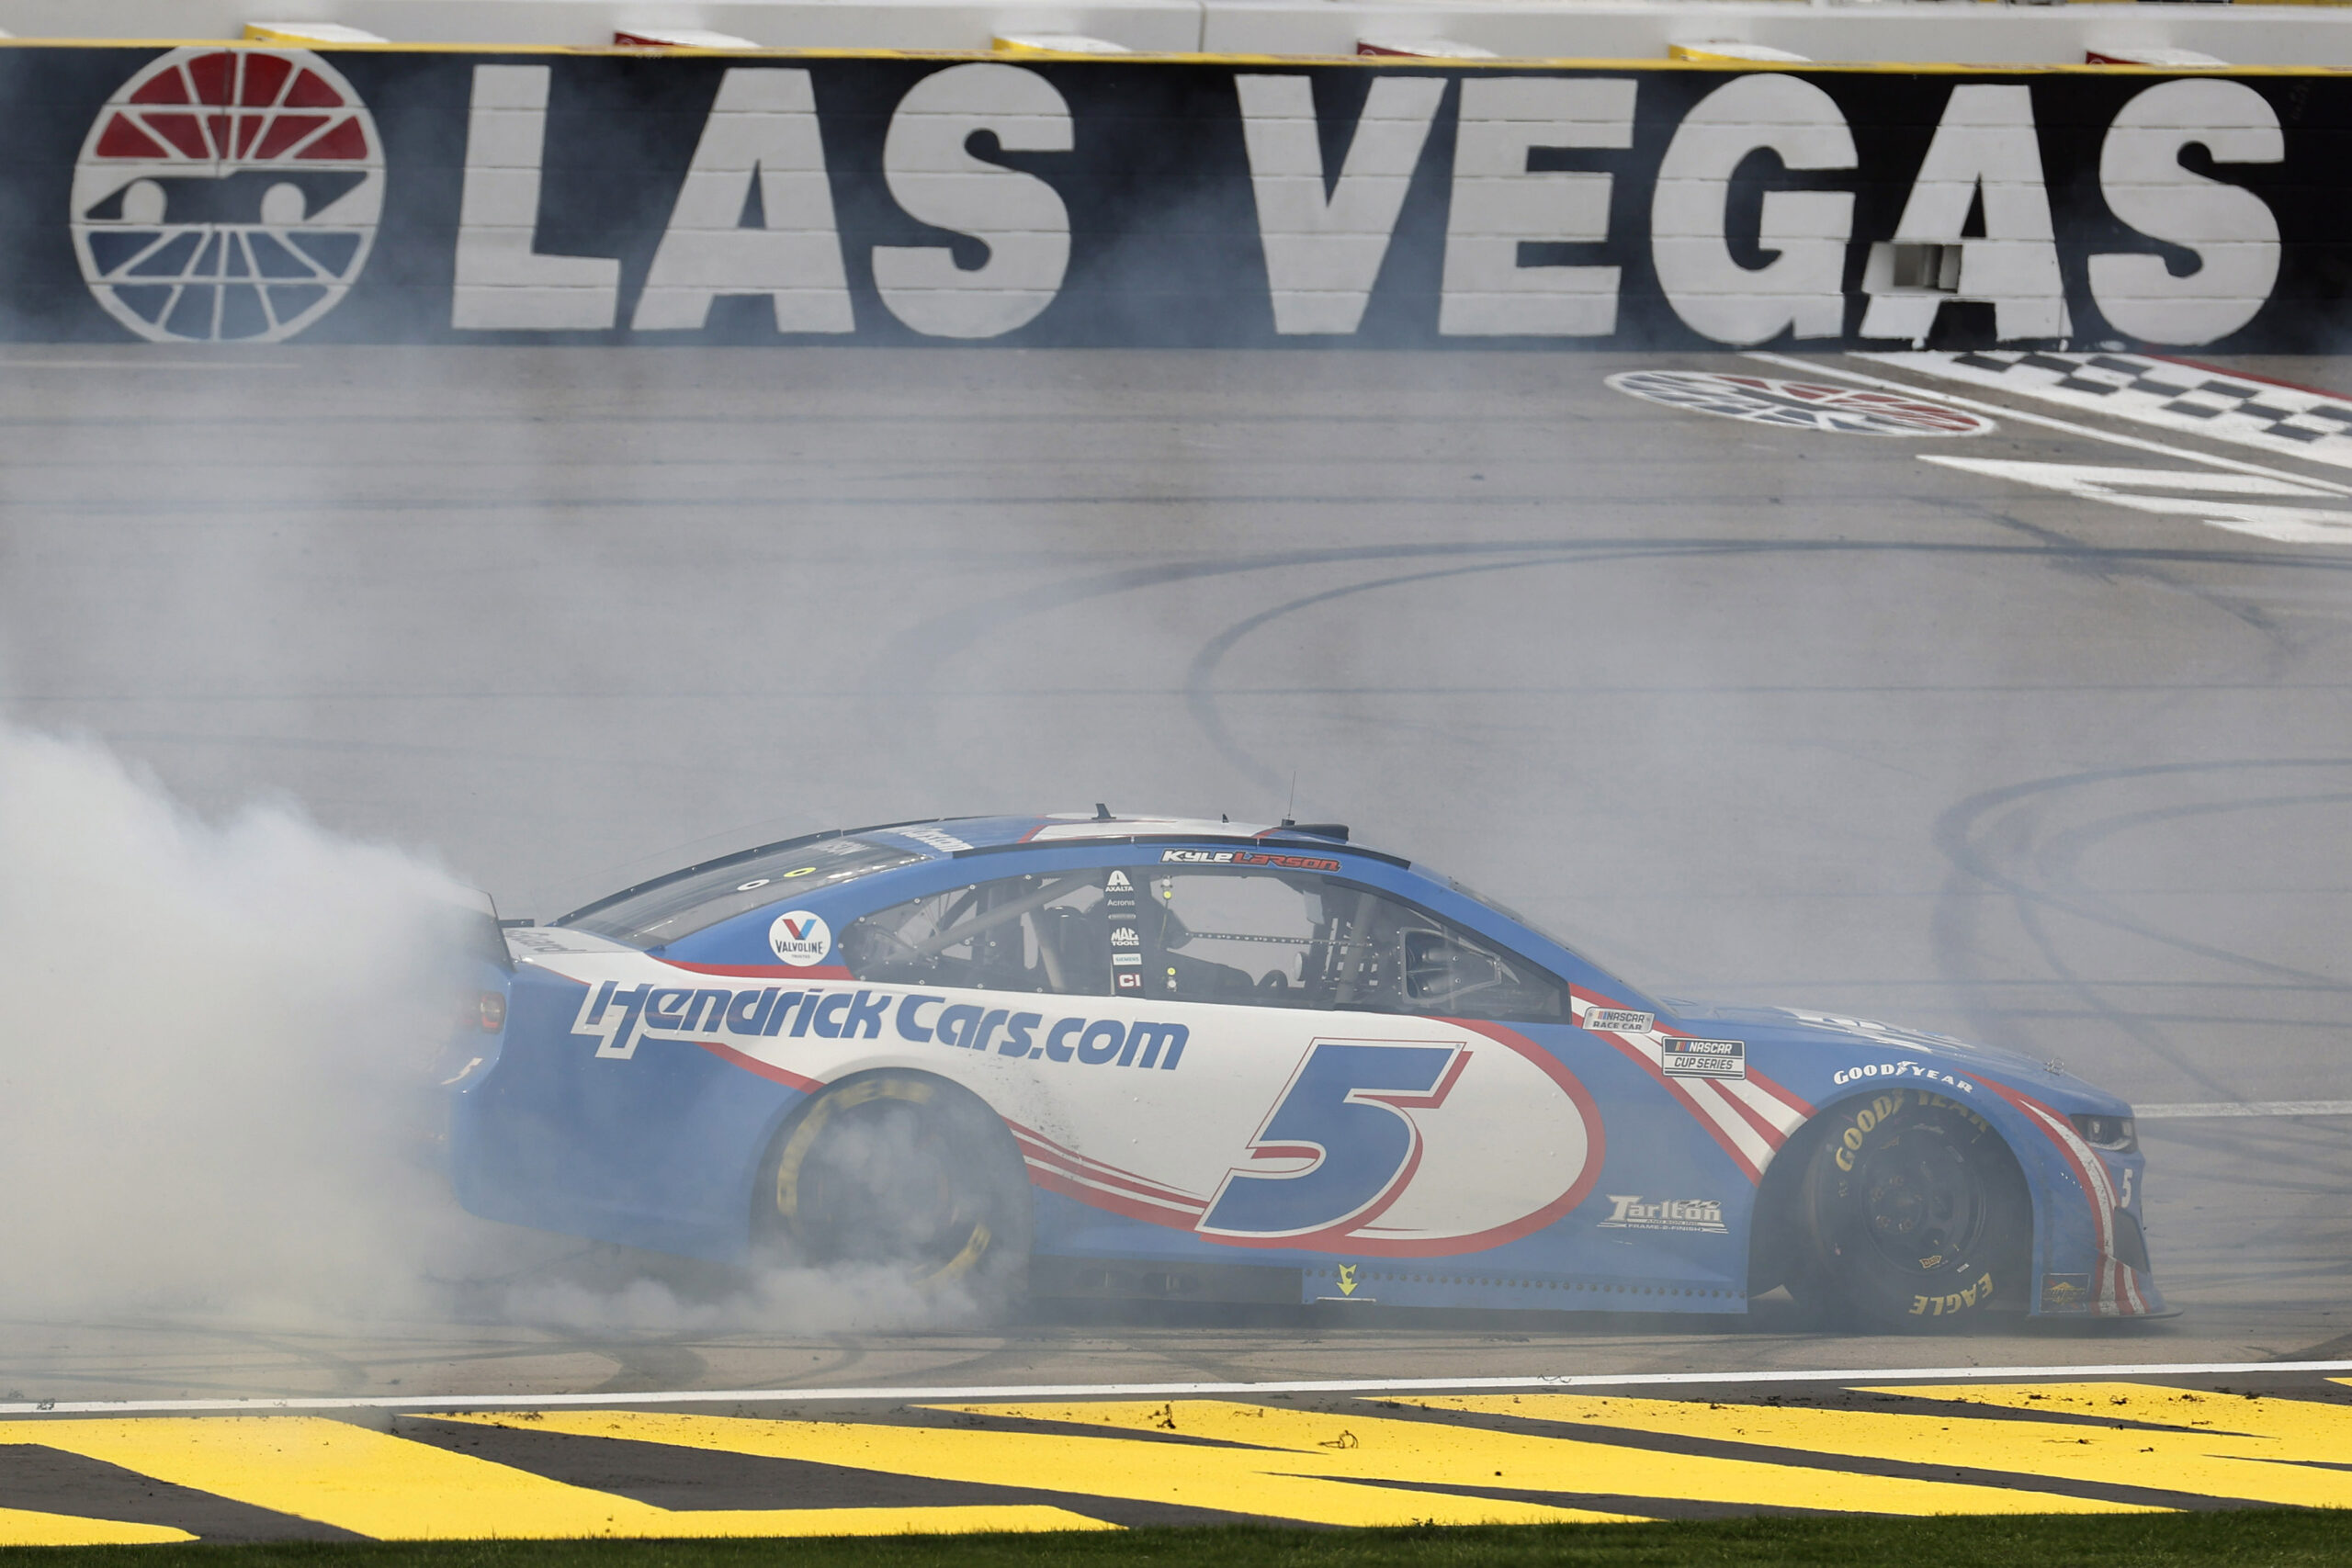 Certainly, Larson enjoyed his victory at Las Vegas. (Photo: Hendrick Motorsports)